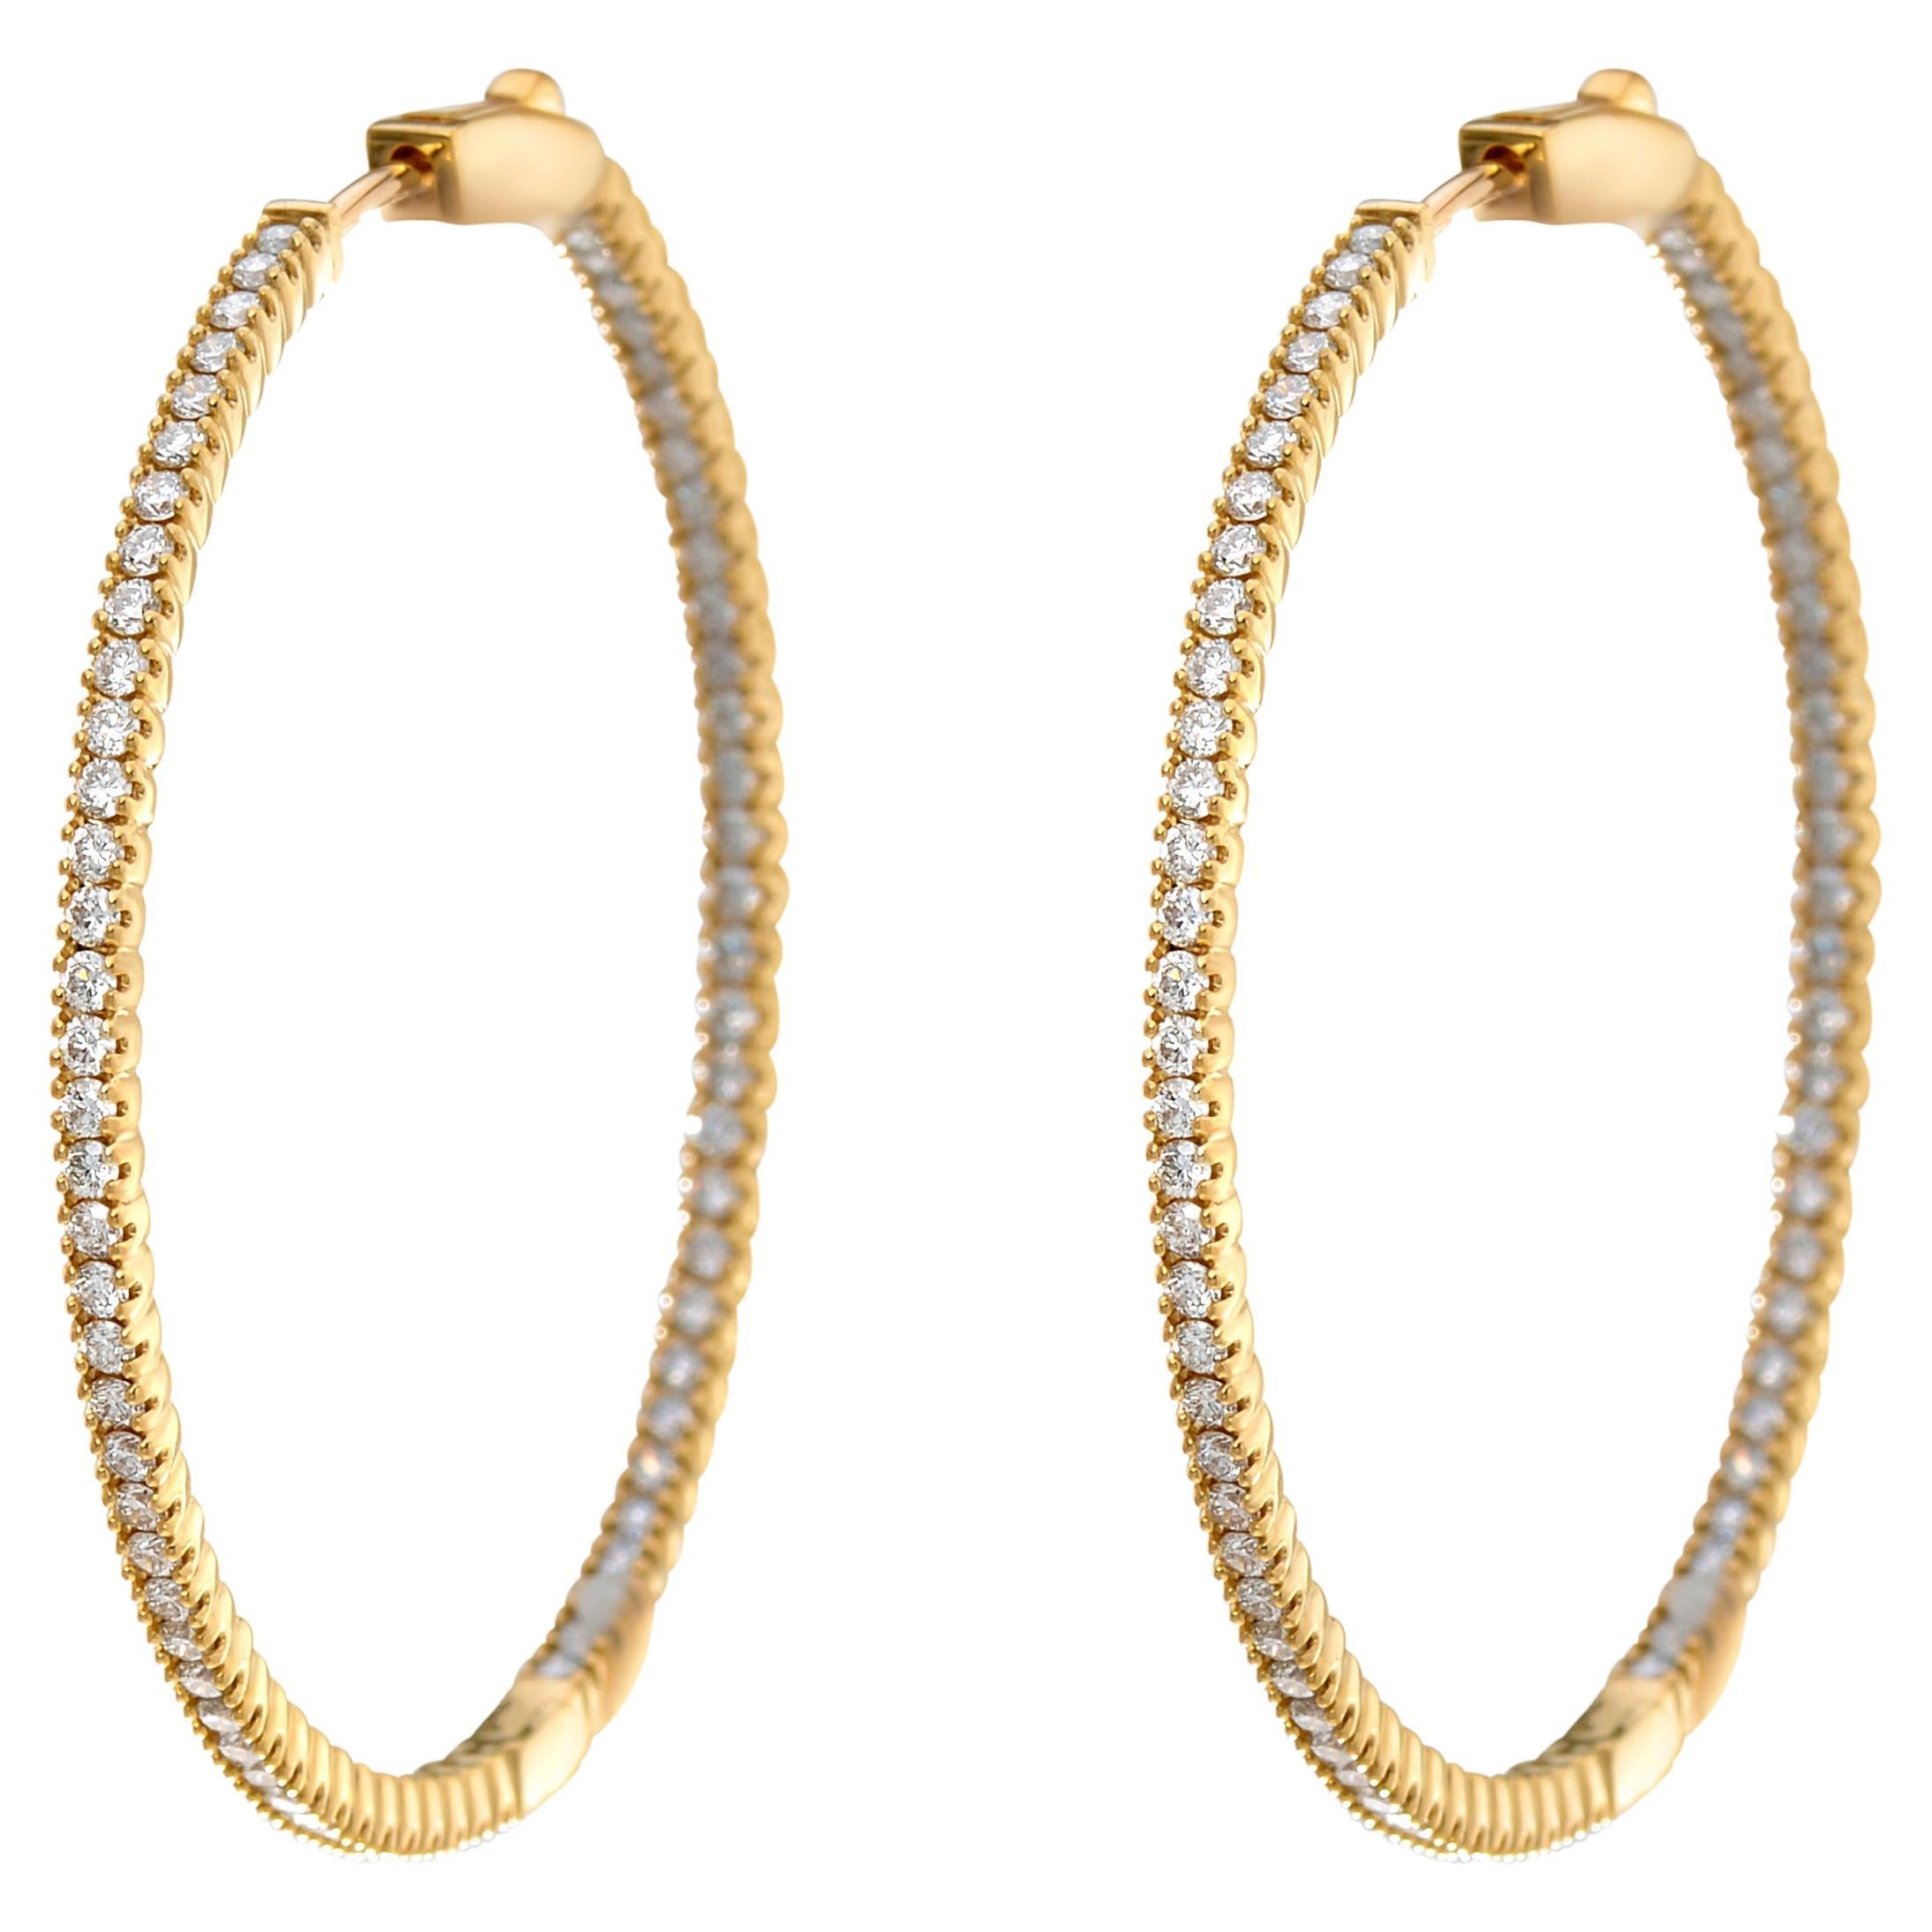 Tresorra 18k Yellow Gold, Diamond Hoop Earrings